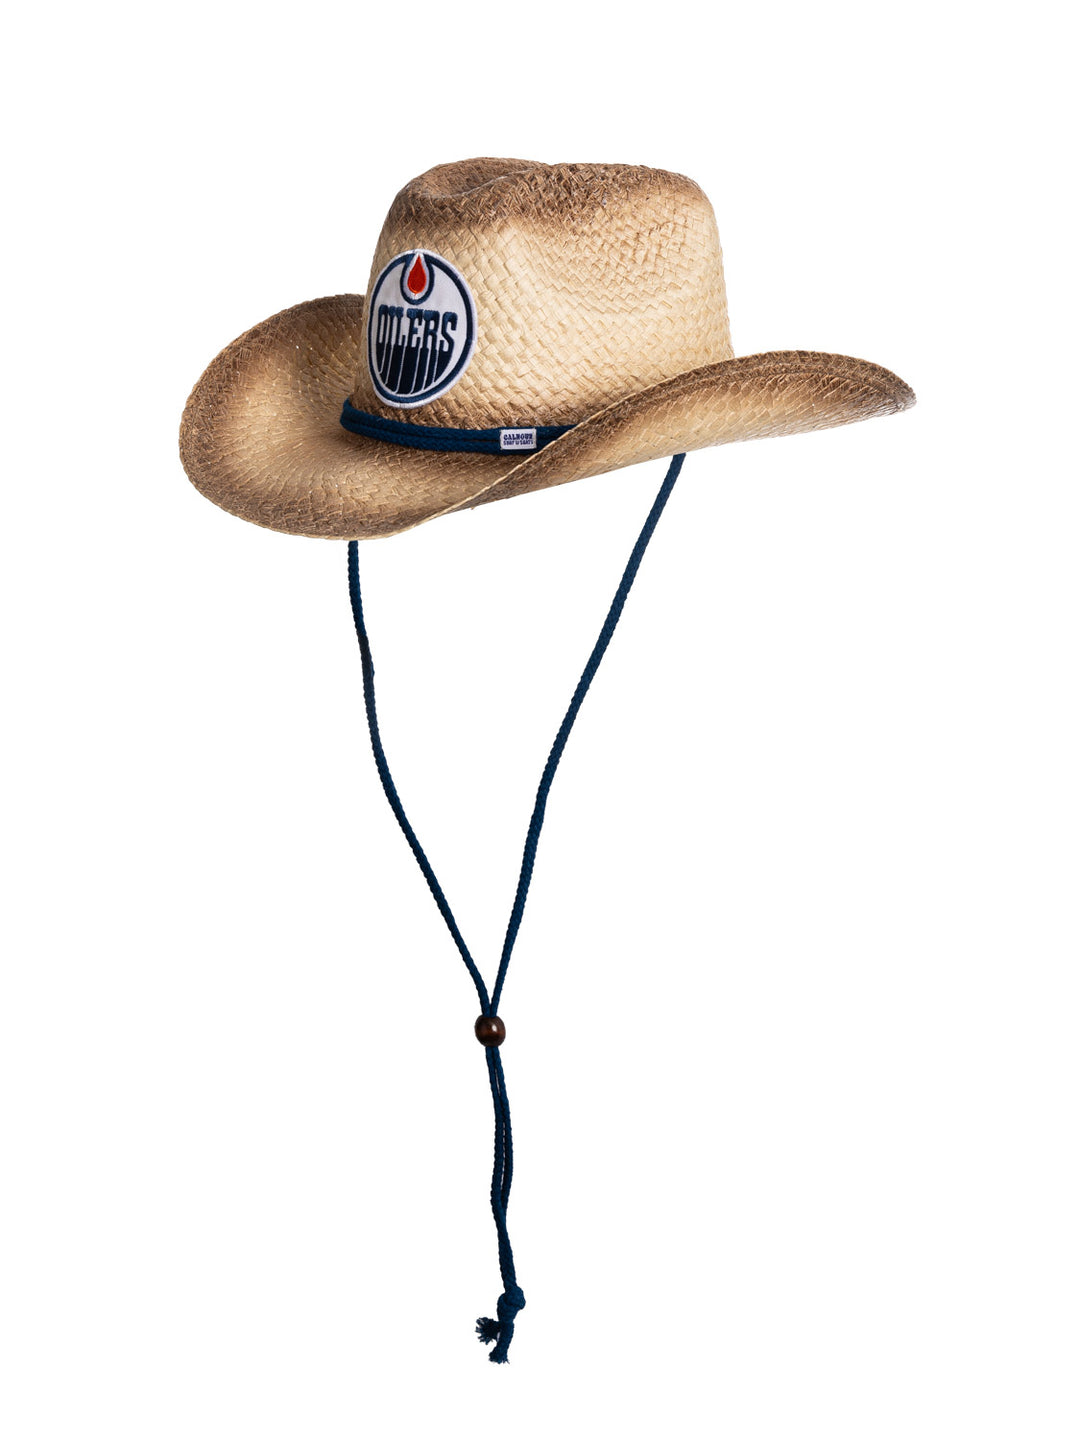 Official Licensed NHL Edmonton Oilers Cowboy Hat